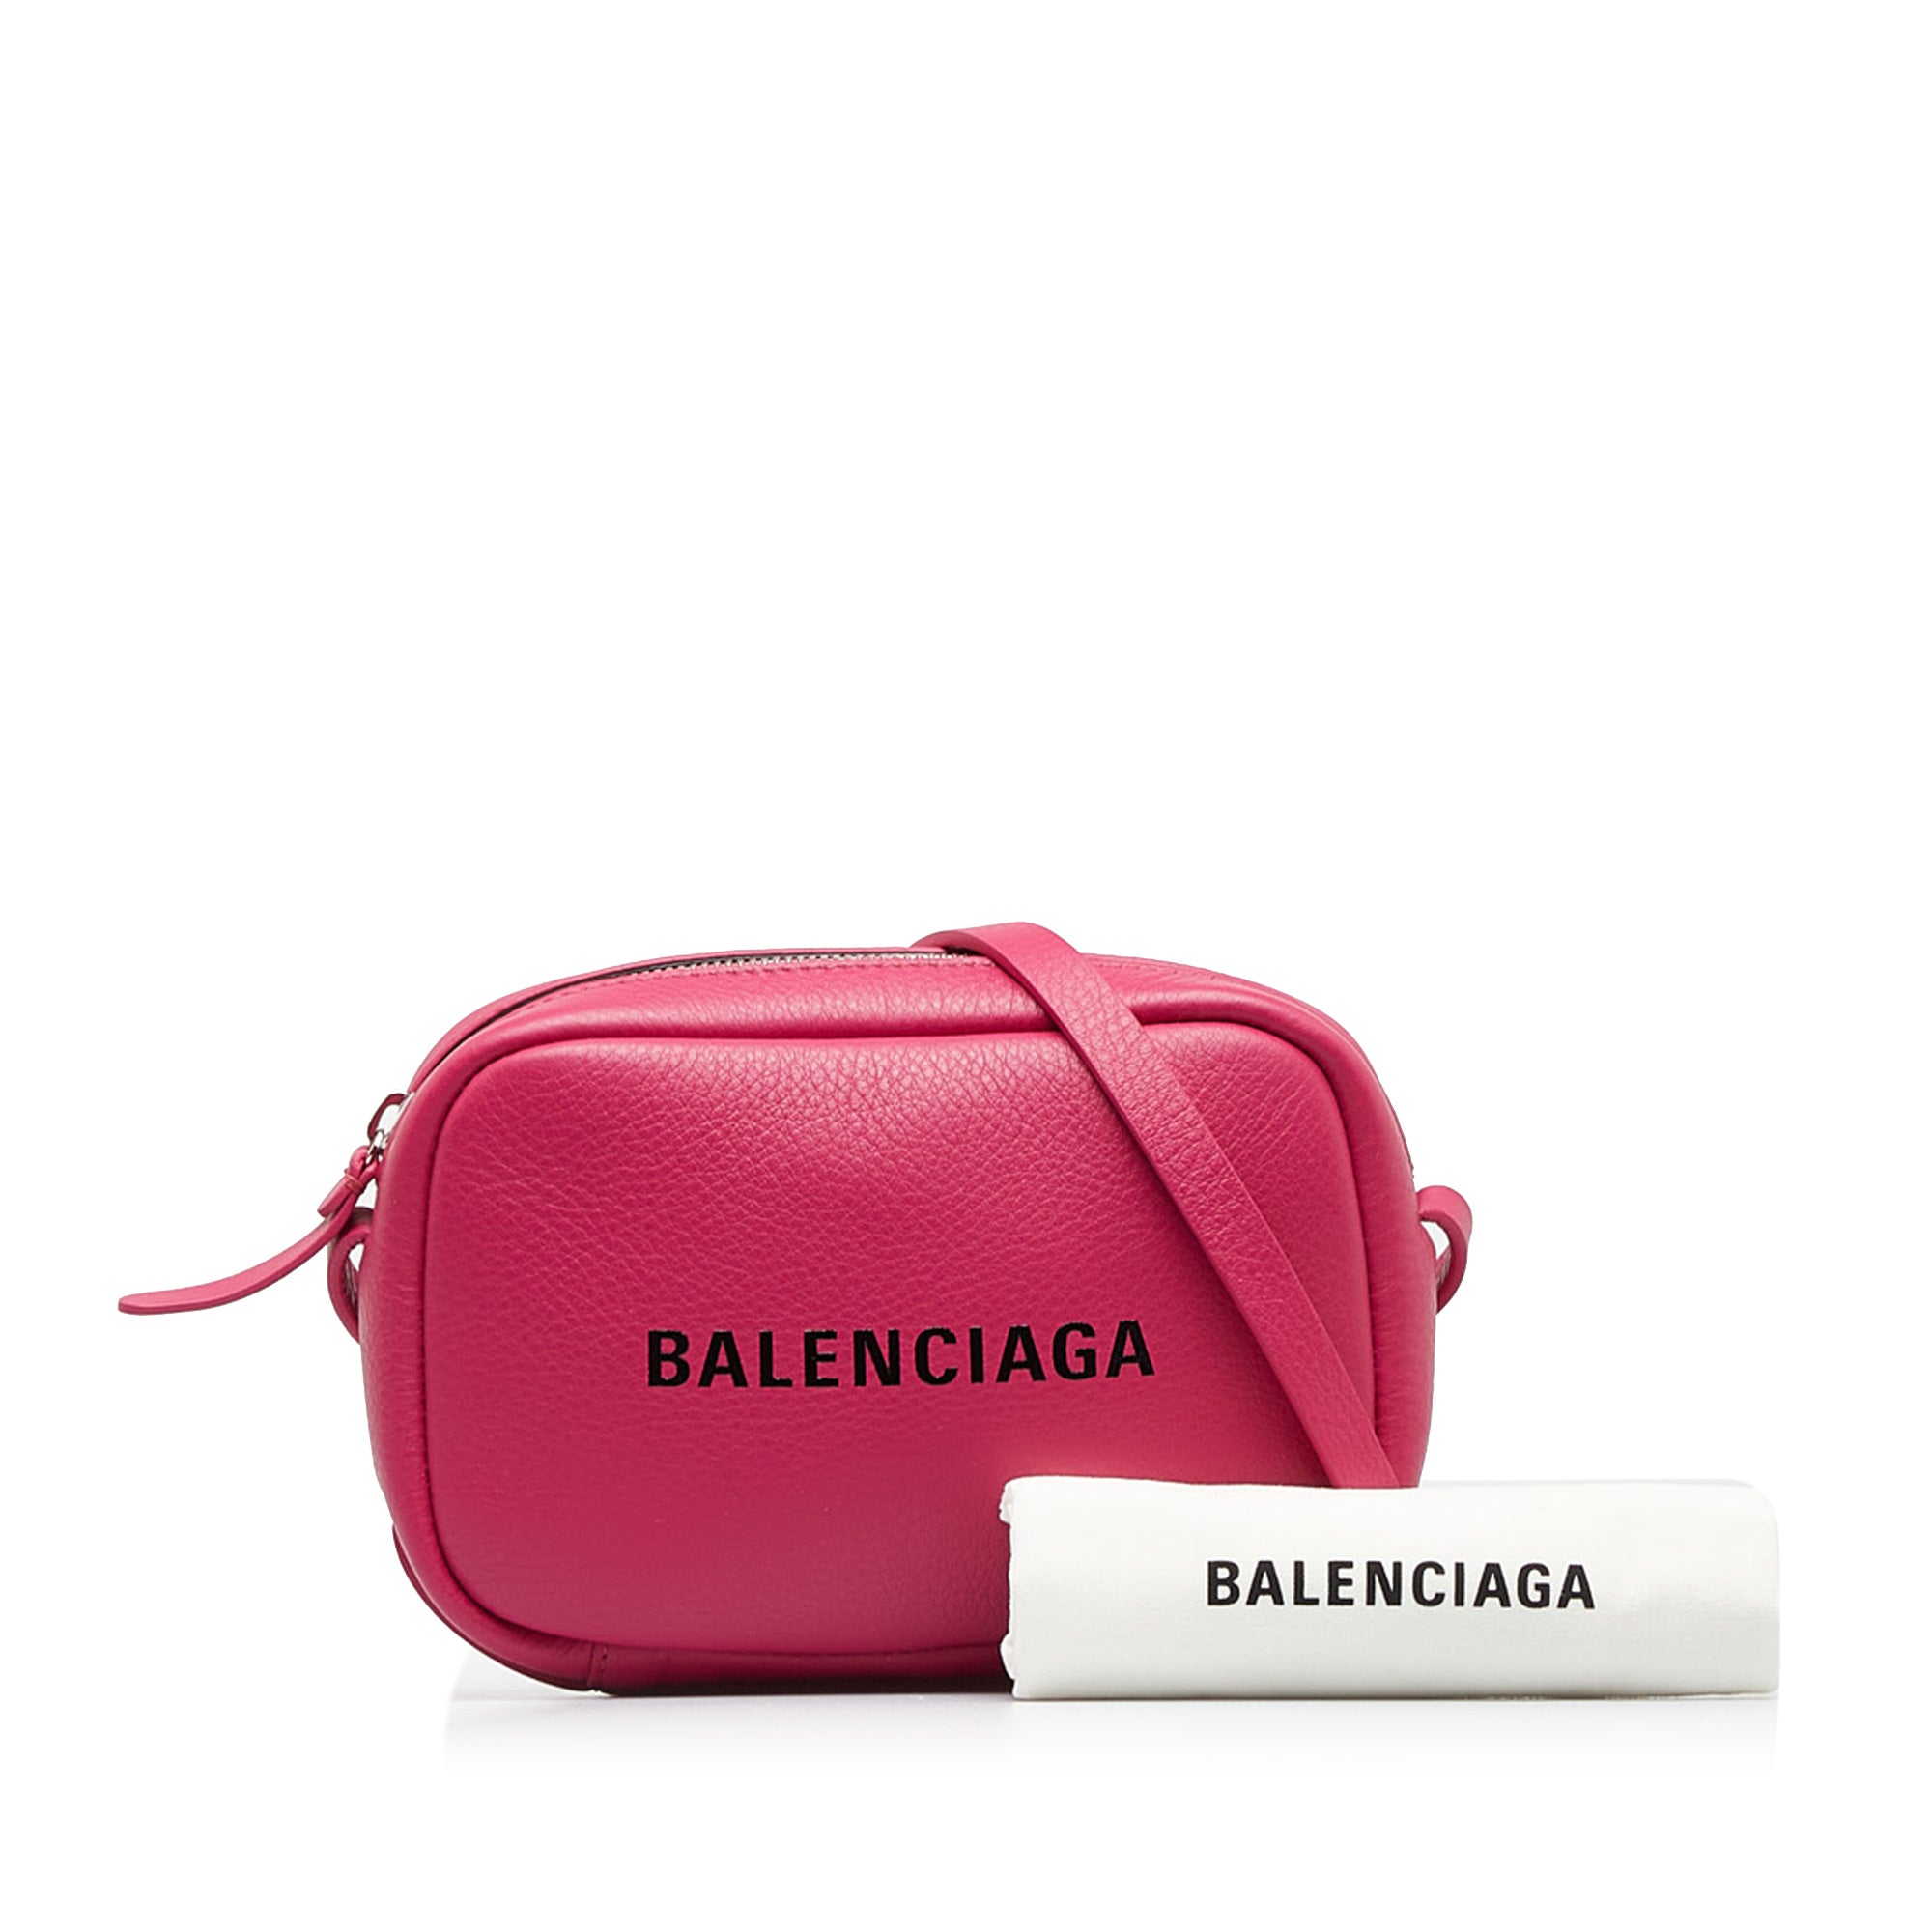 Balenciaga Everyday XS Camera Bag - Black Crossbody Bags, Handbags